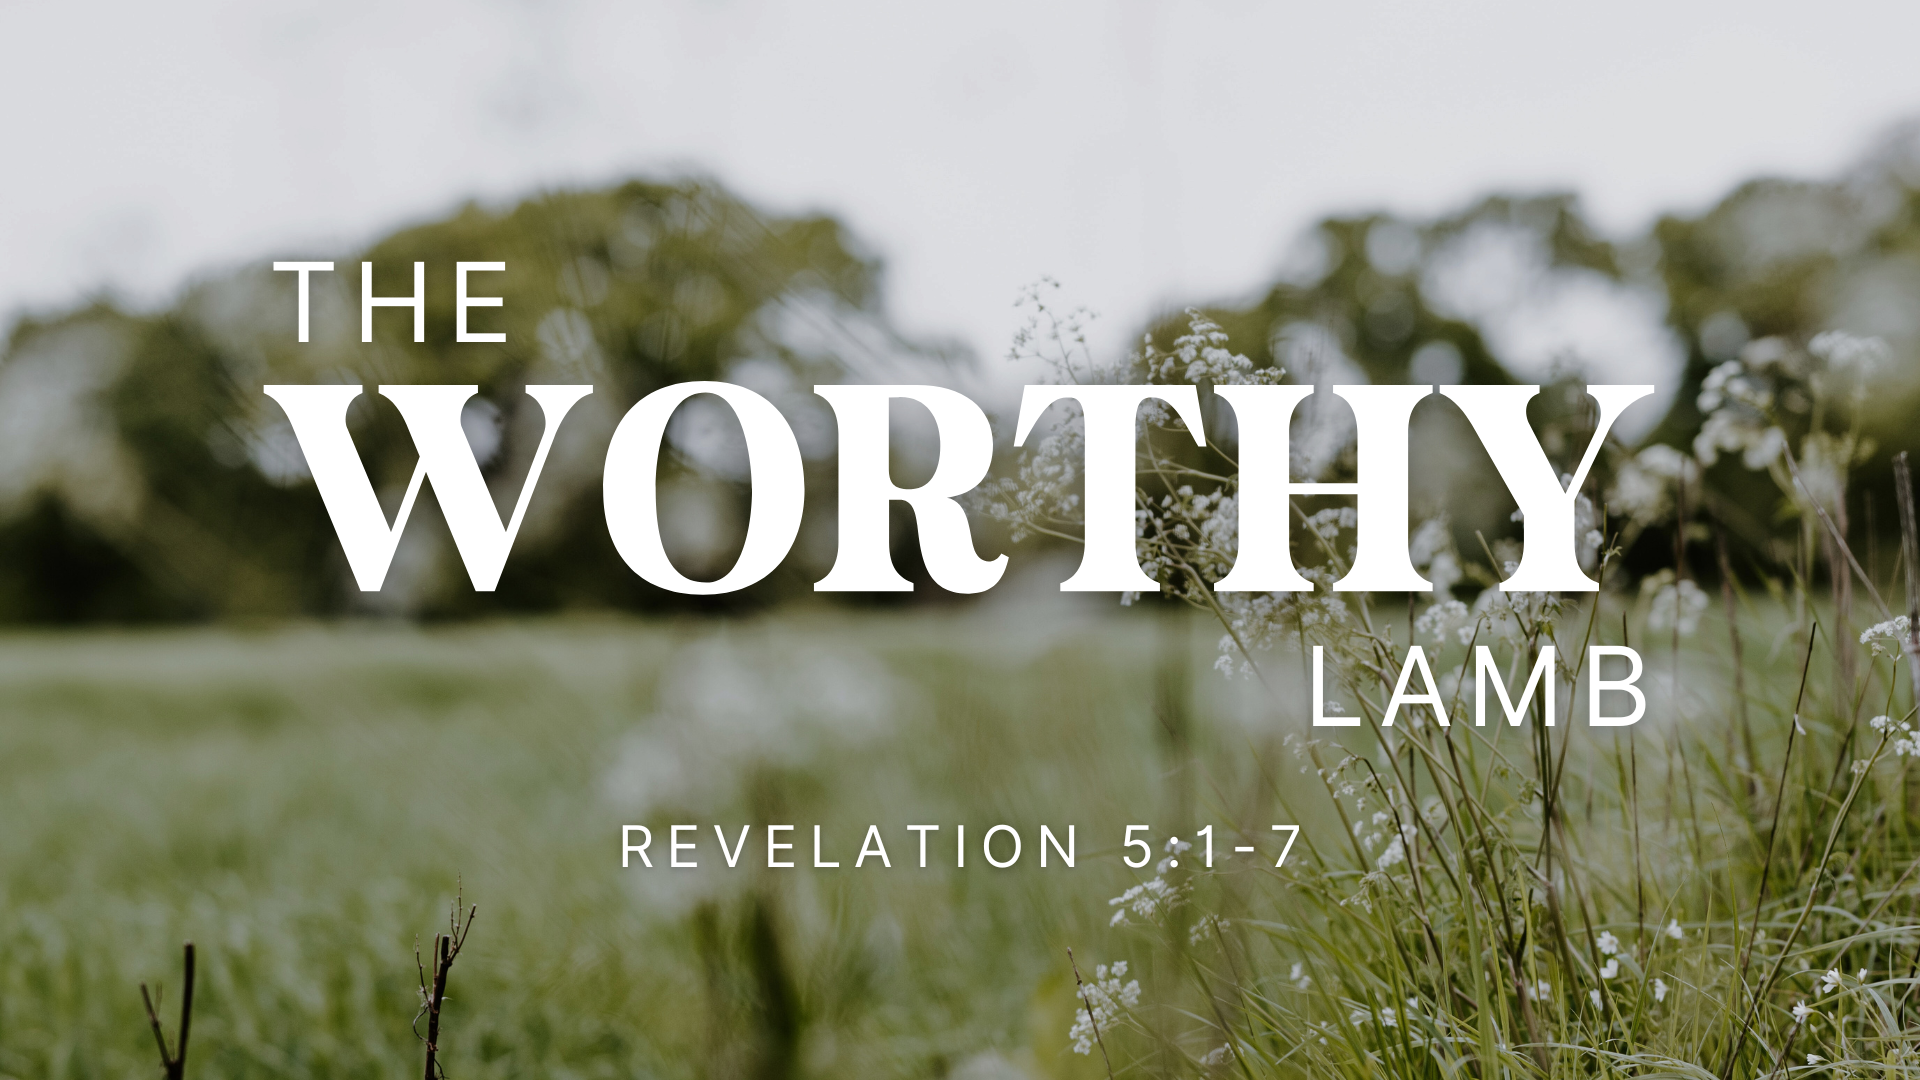 The Worthy Lamb banner